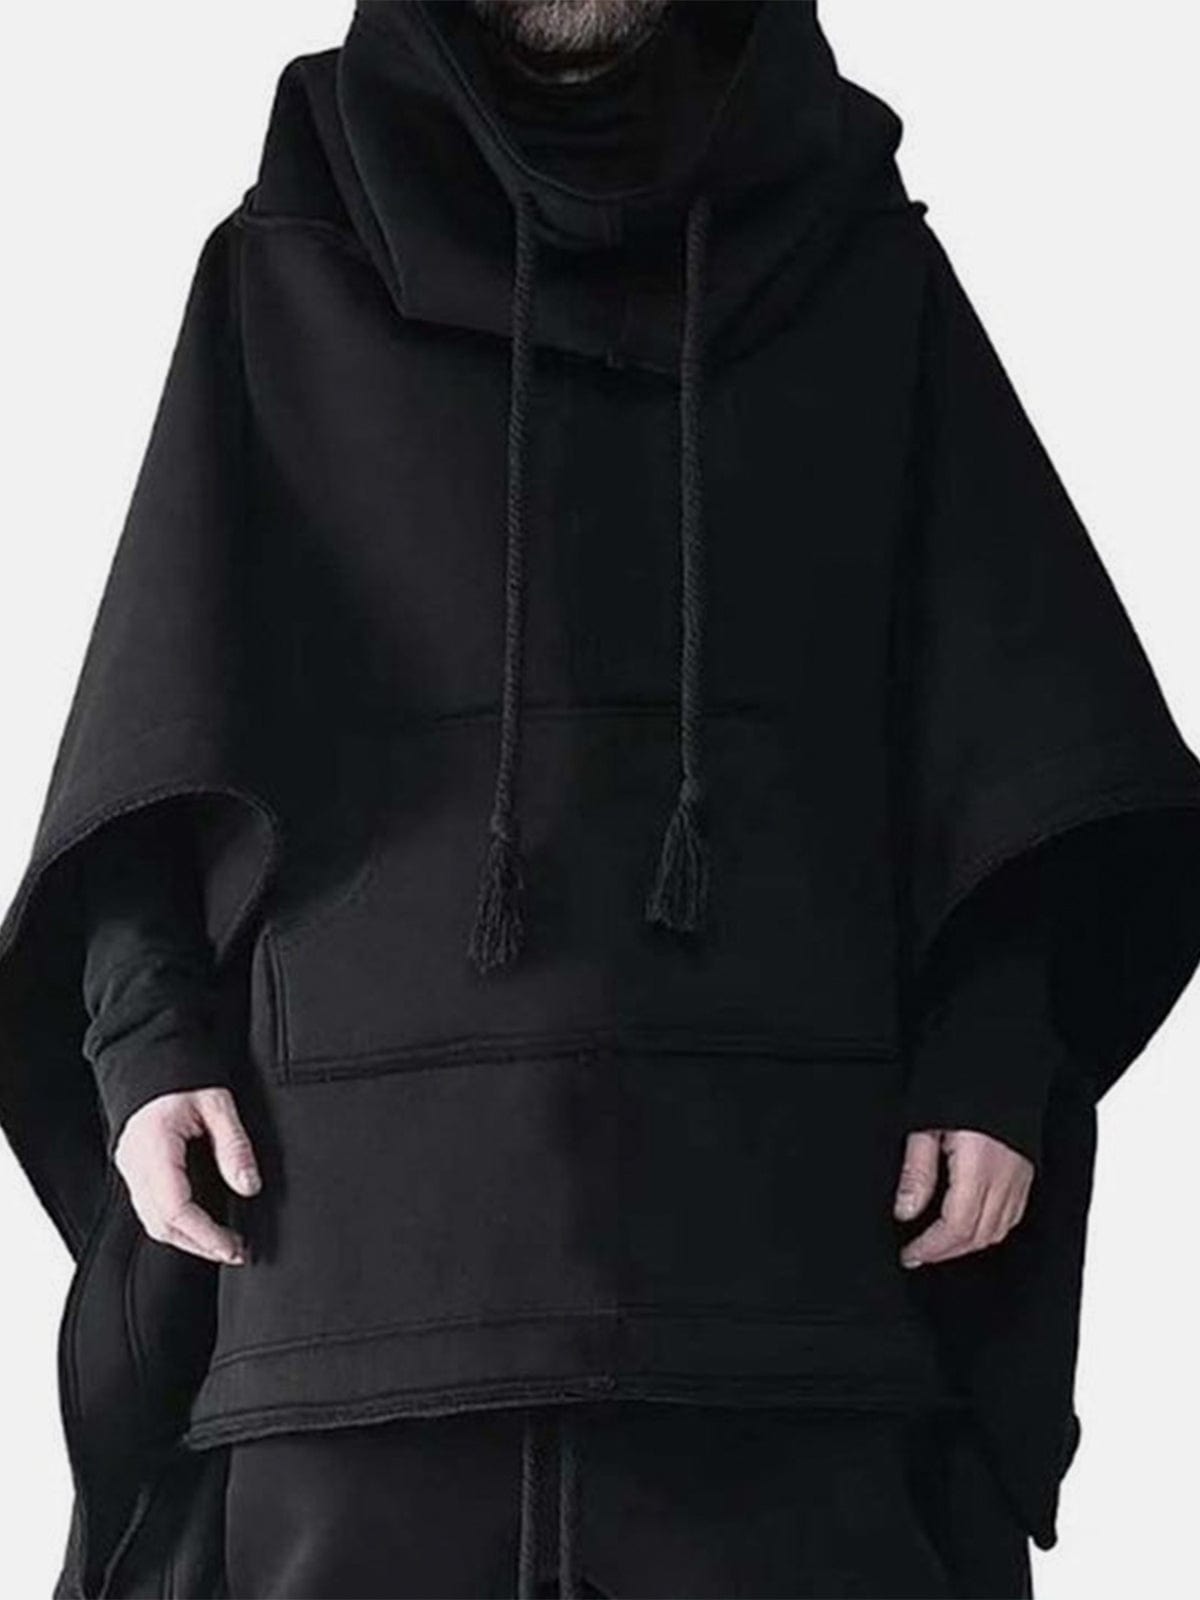 Dark Bat Cloak Cape Wizard Hooded Coat Streetwear Brand Techwear Combat Tactical YUGEN THEORY